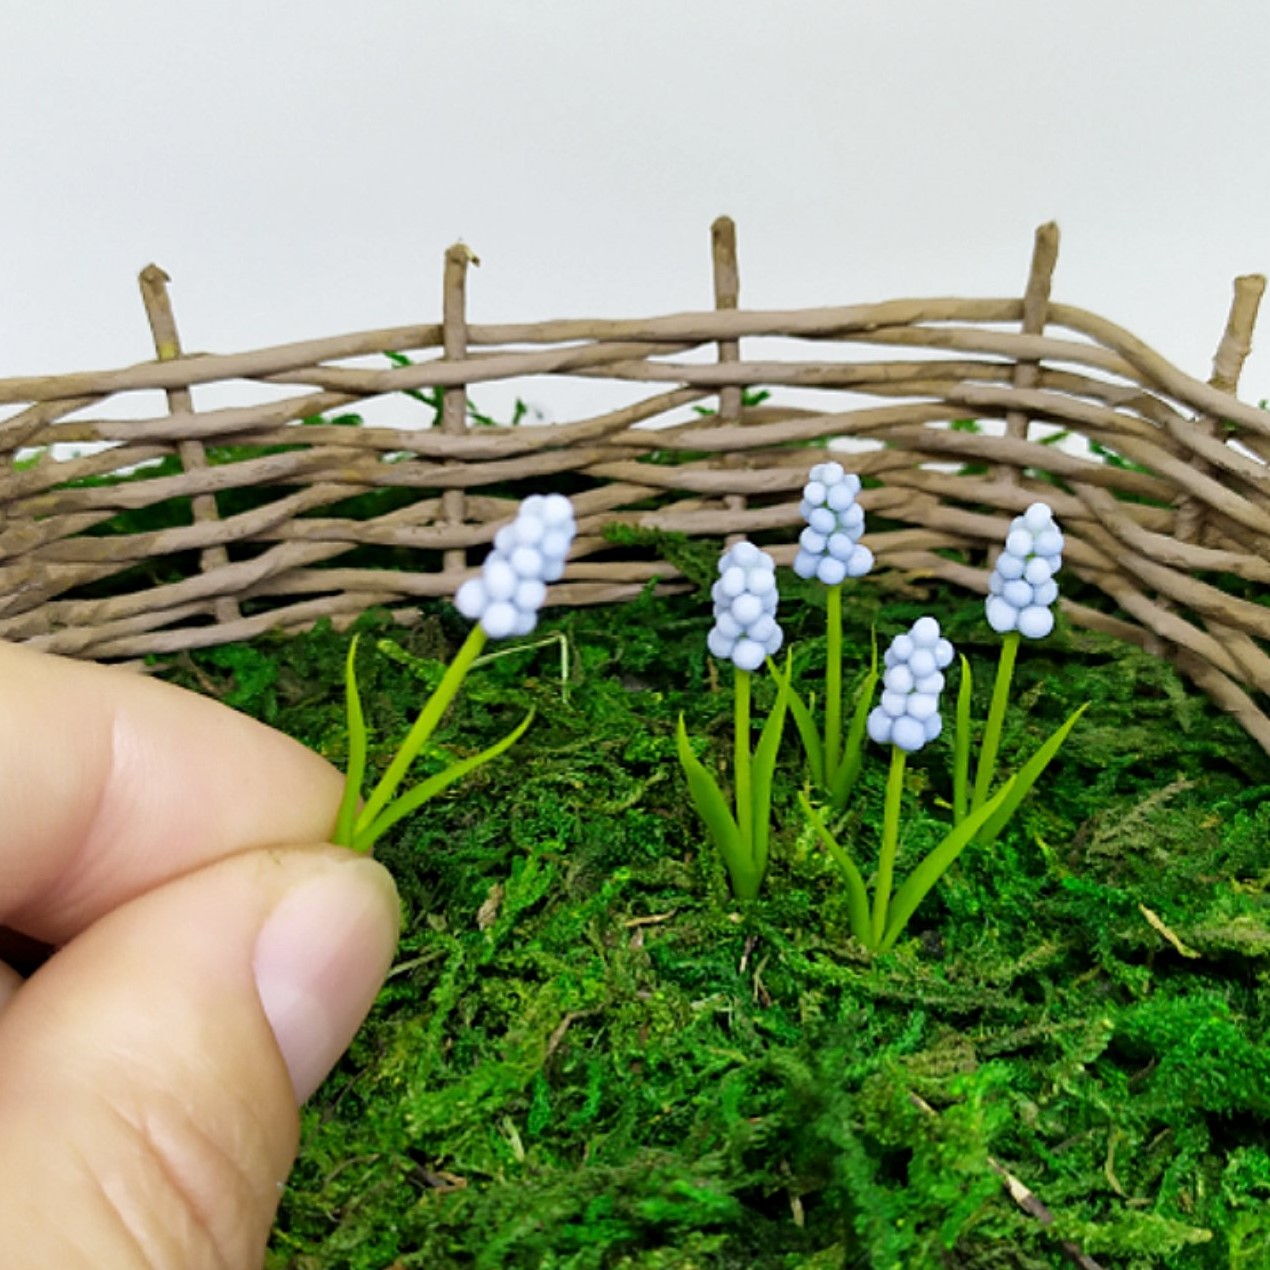 Miniature garden flowers Muscari Handmade